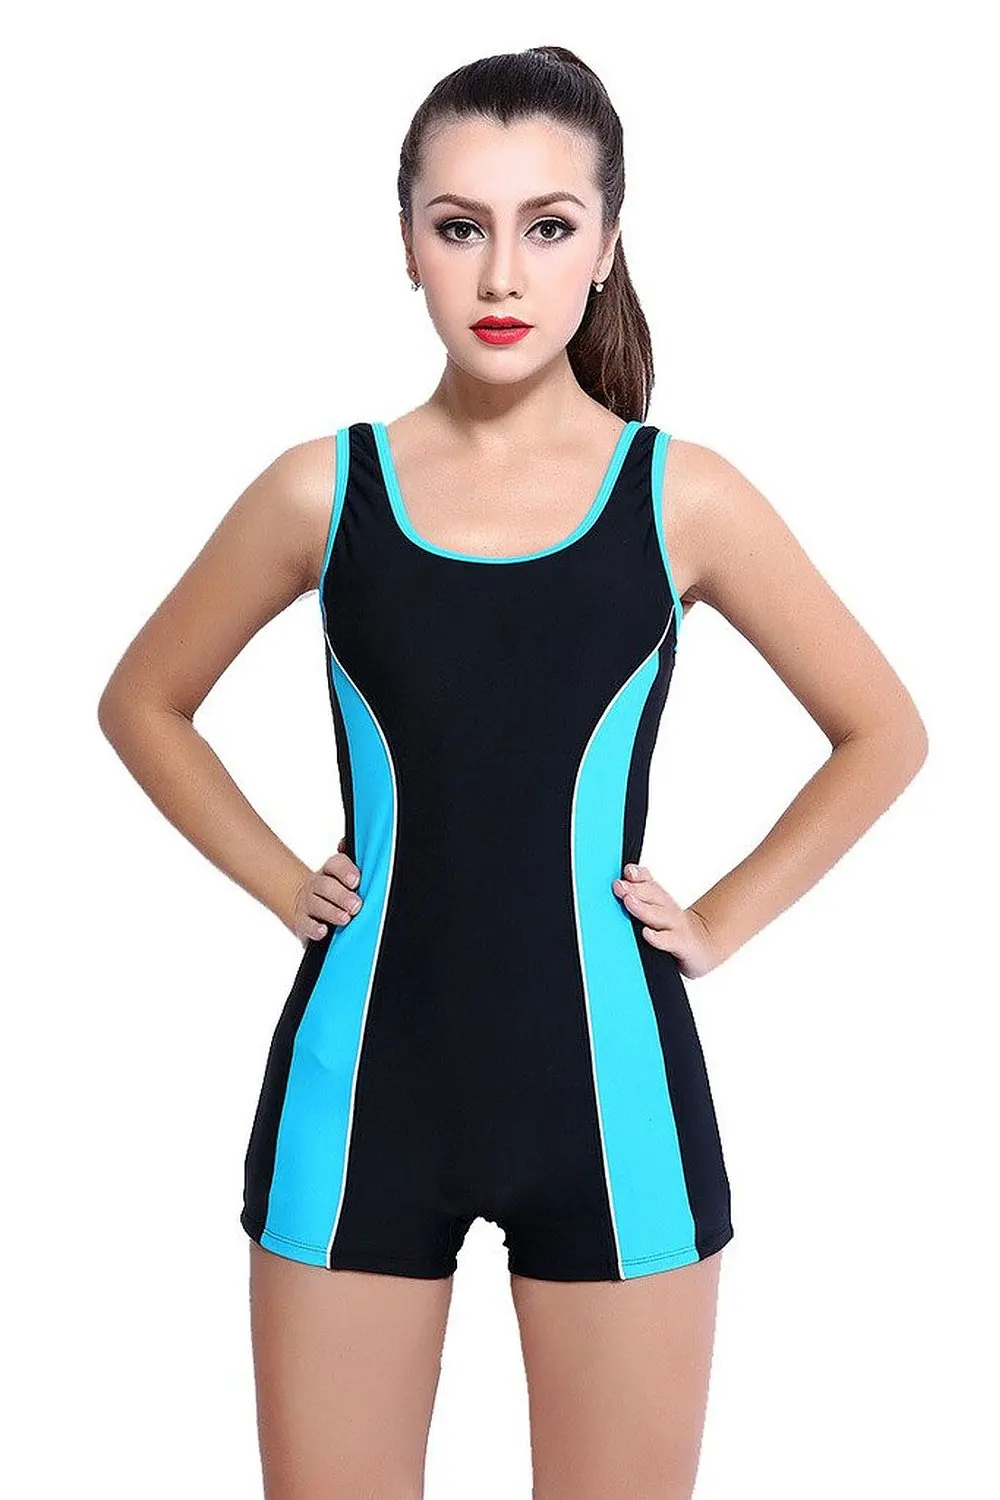 Cheap Legsuit Swimming Costumes, find Legsuit Swimming Costumes deals ...